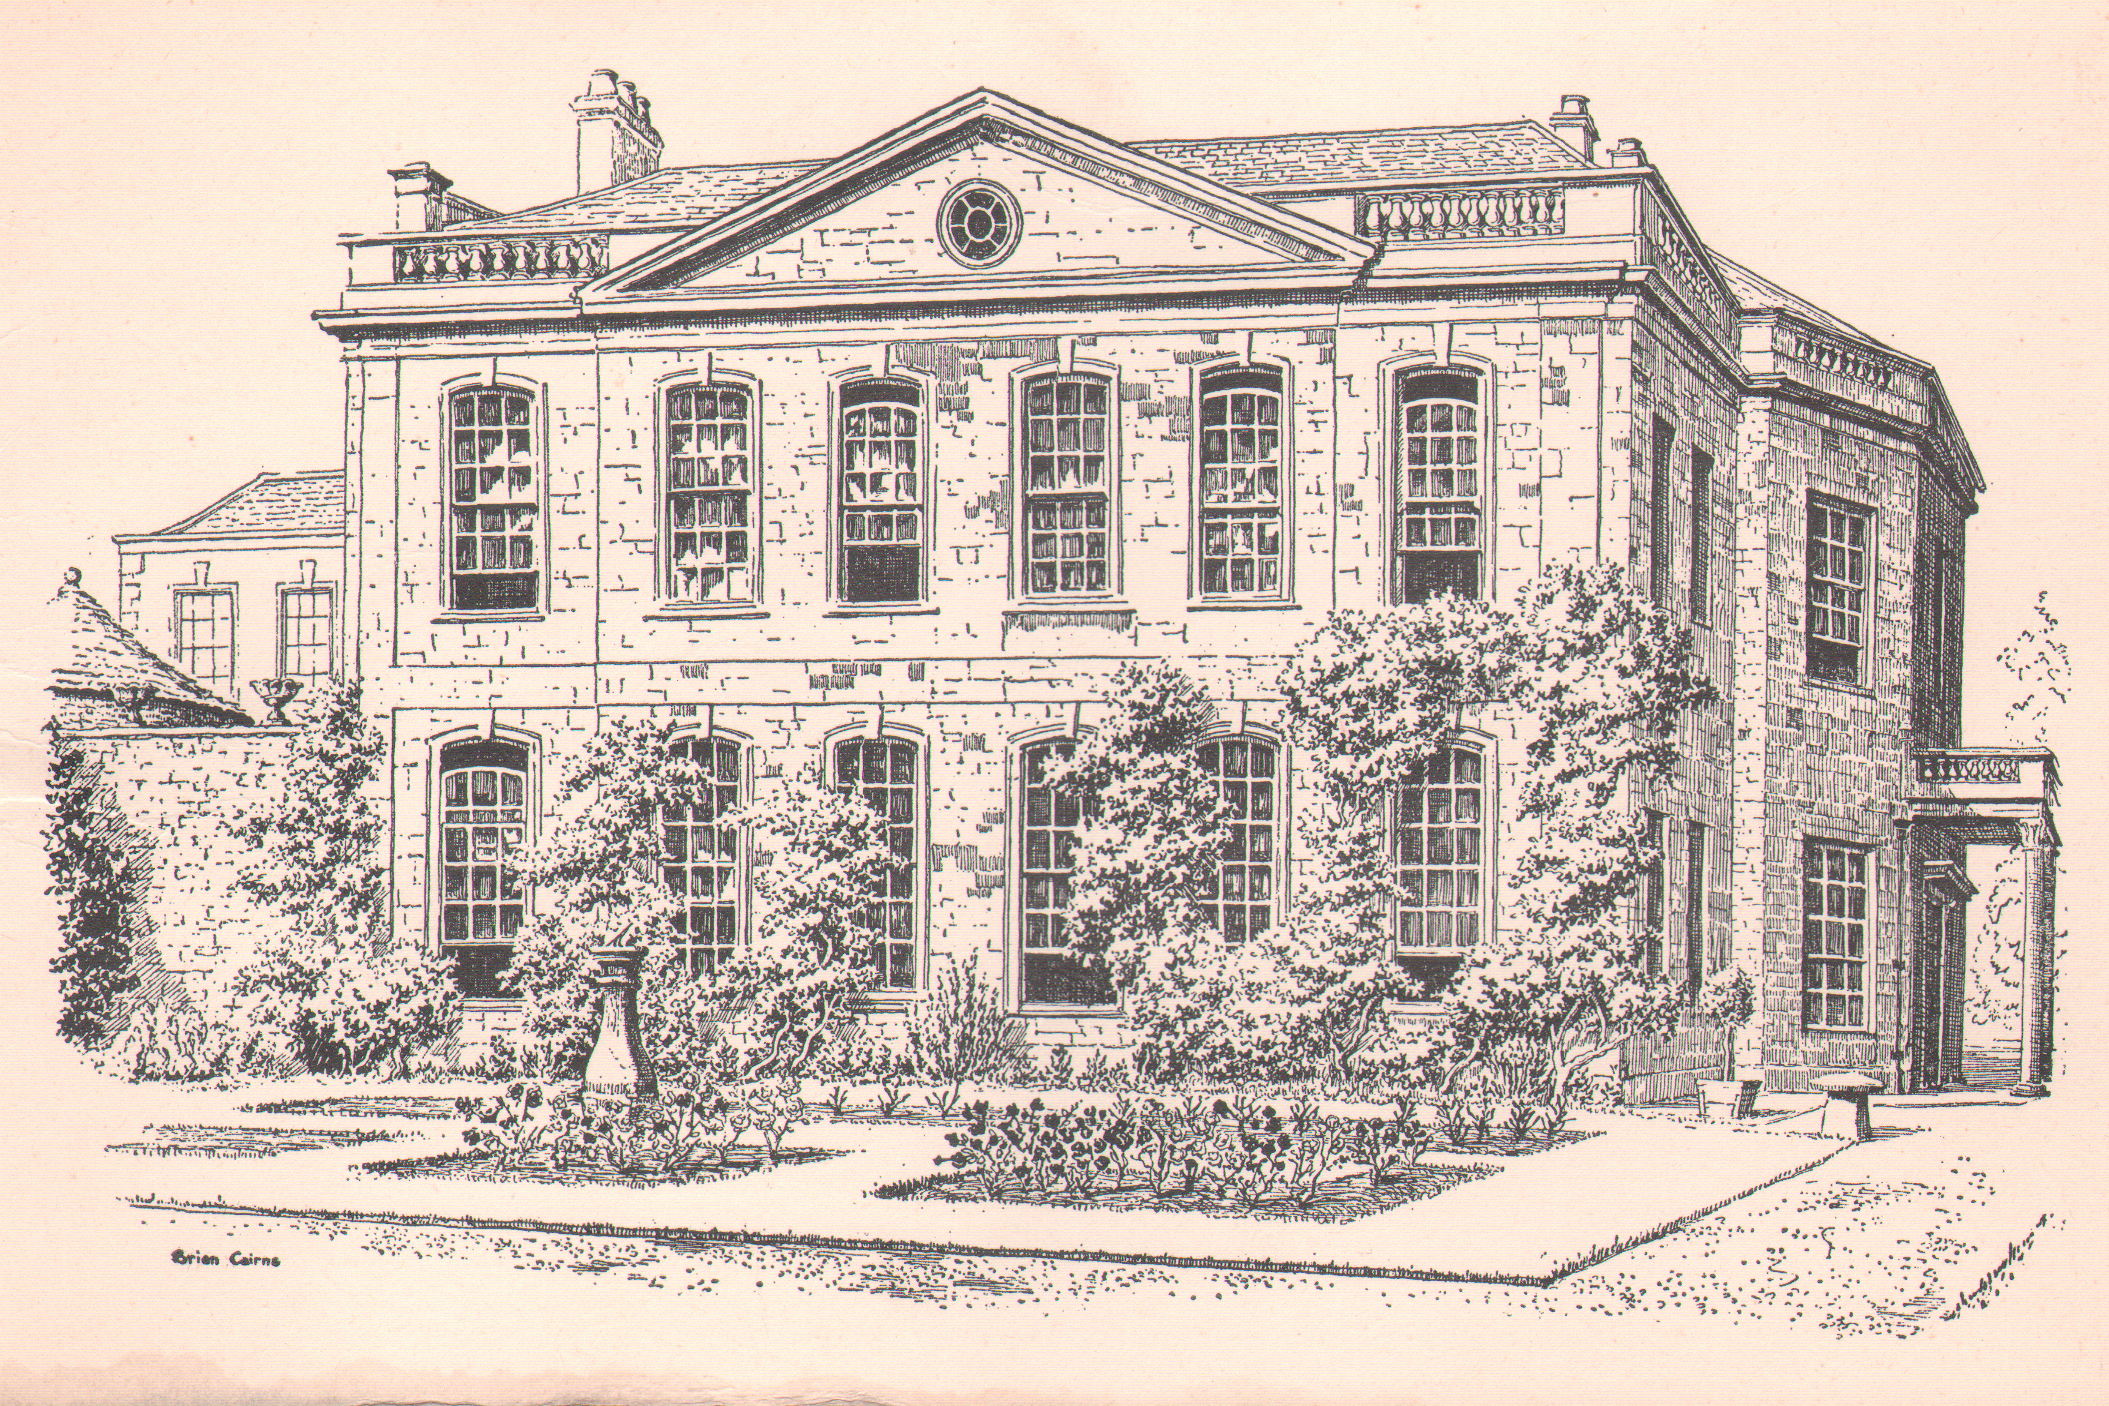 Cokethorpe Mansion House historic image - Our History - Where Next